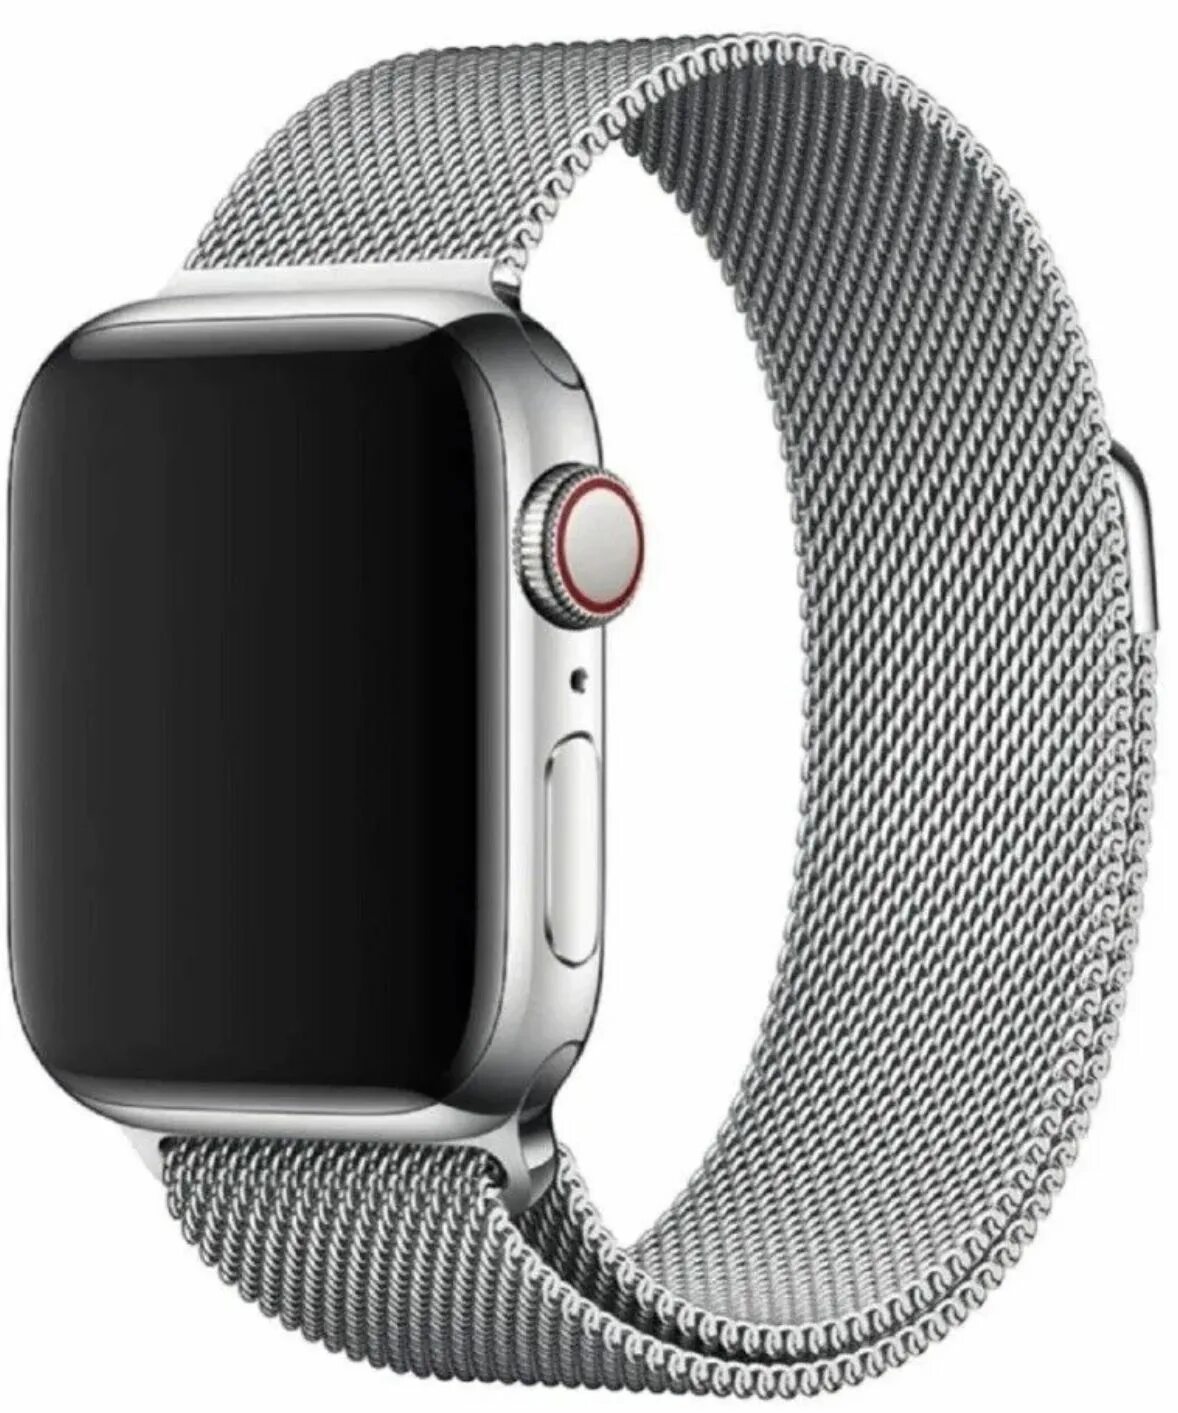 Watch series 5 цена. Apple watch Series 2 42mm. Apple watch 3. Apple watch 3 42 mm. Apple watch 44mm.